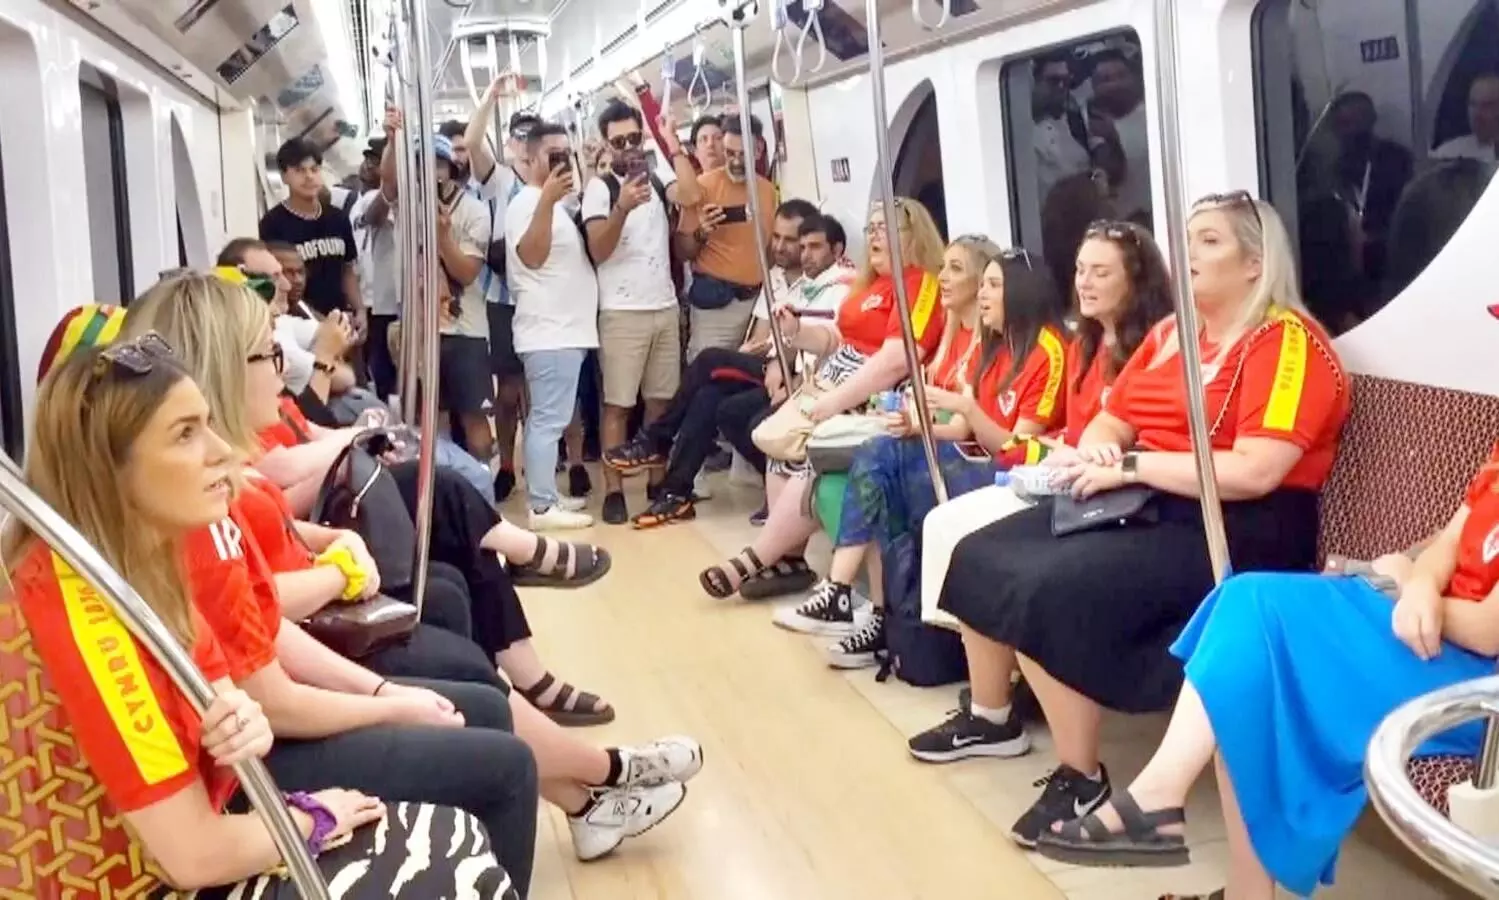 Metro travelers while qatar world cup